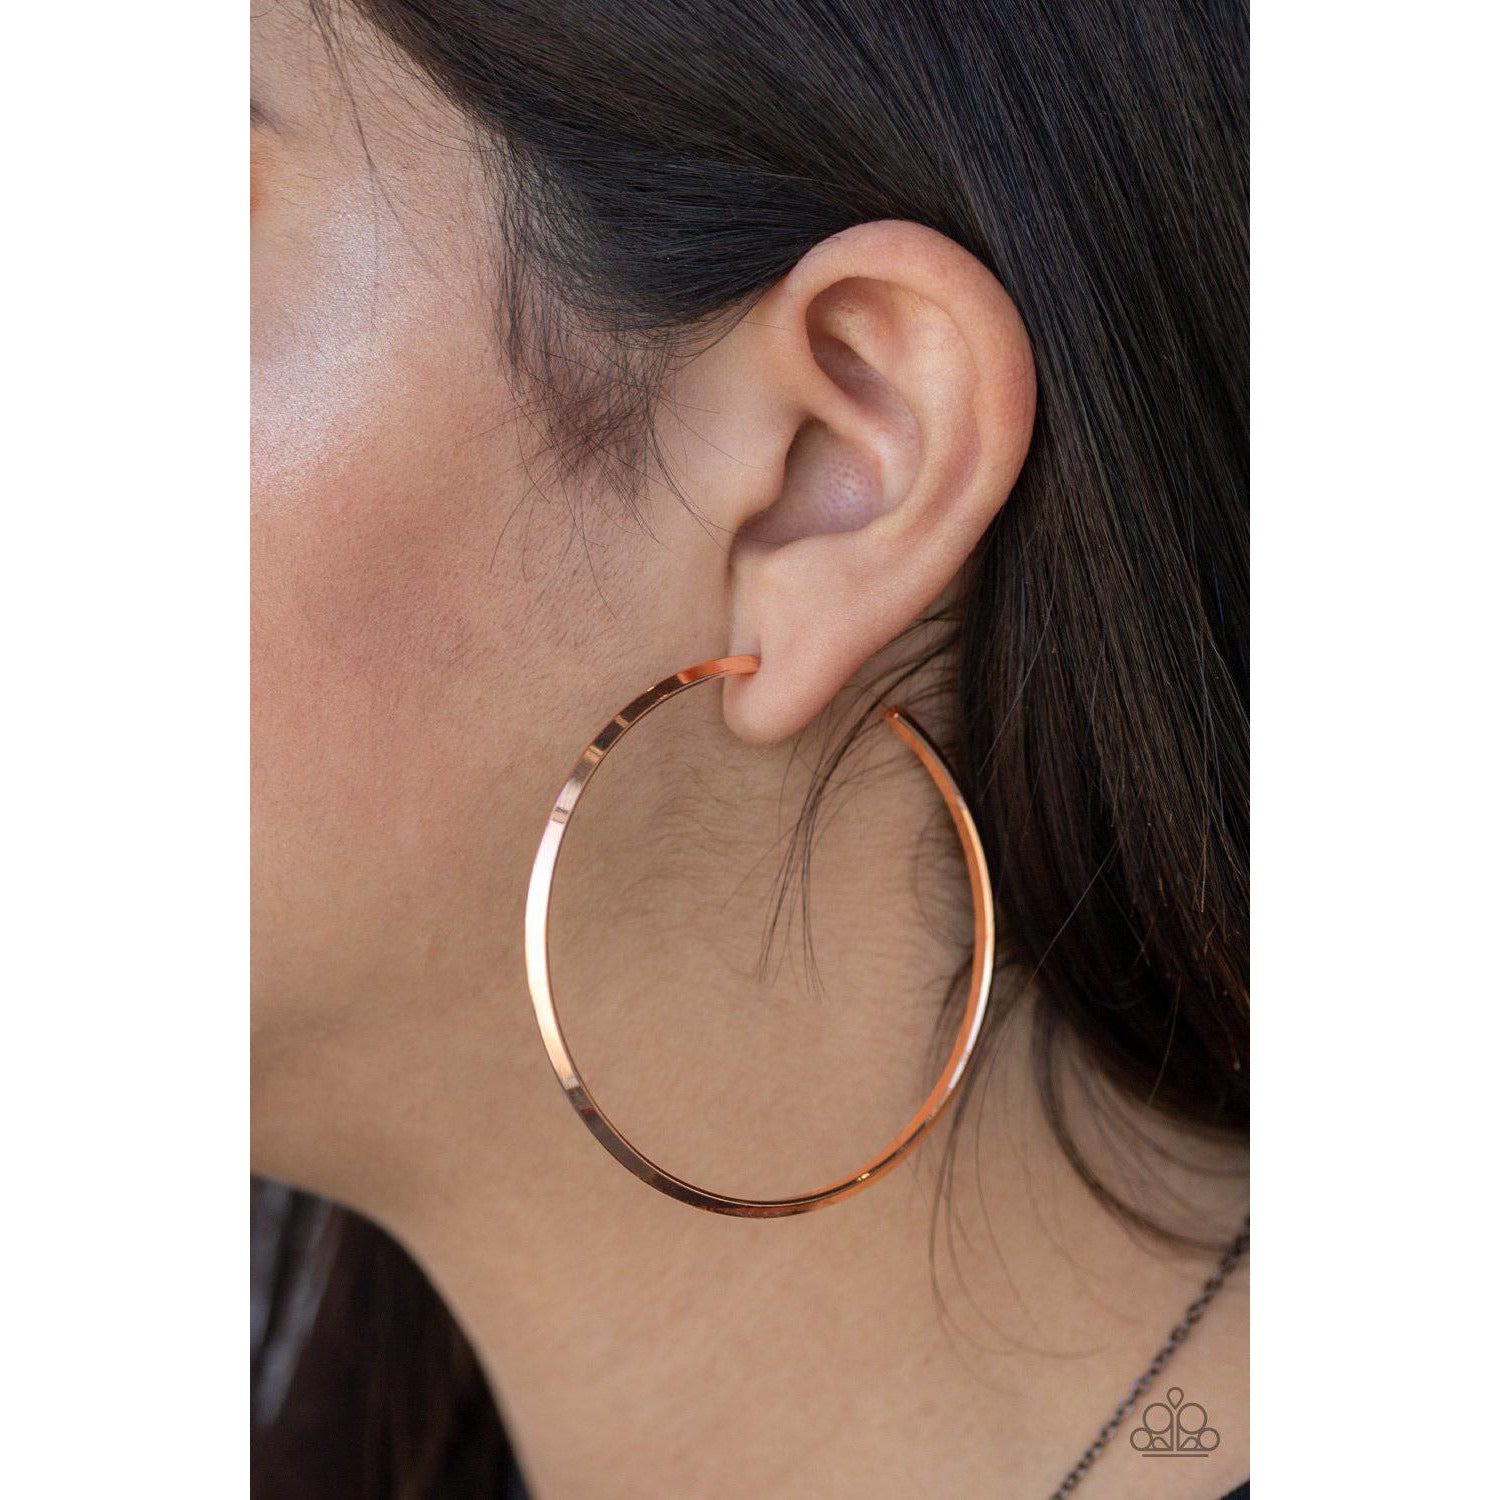 5th Avenue Attitude - Copper Earrings - Paparazzi Accessories - GlaMarous Titi Jewels